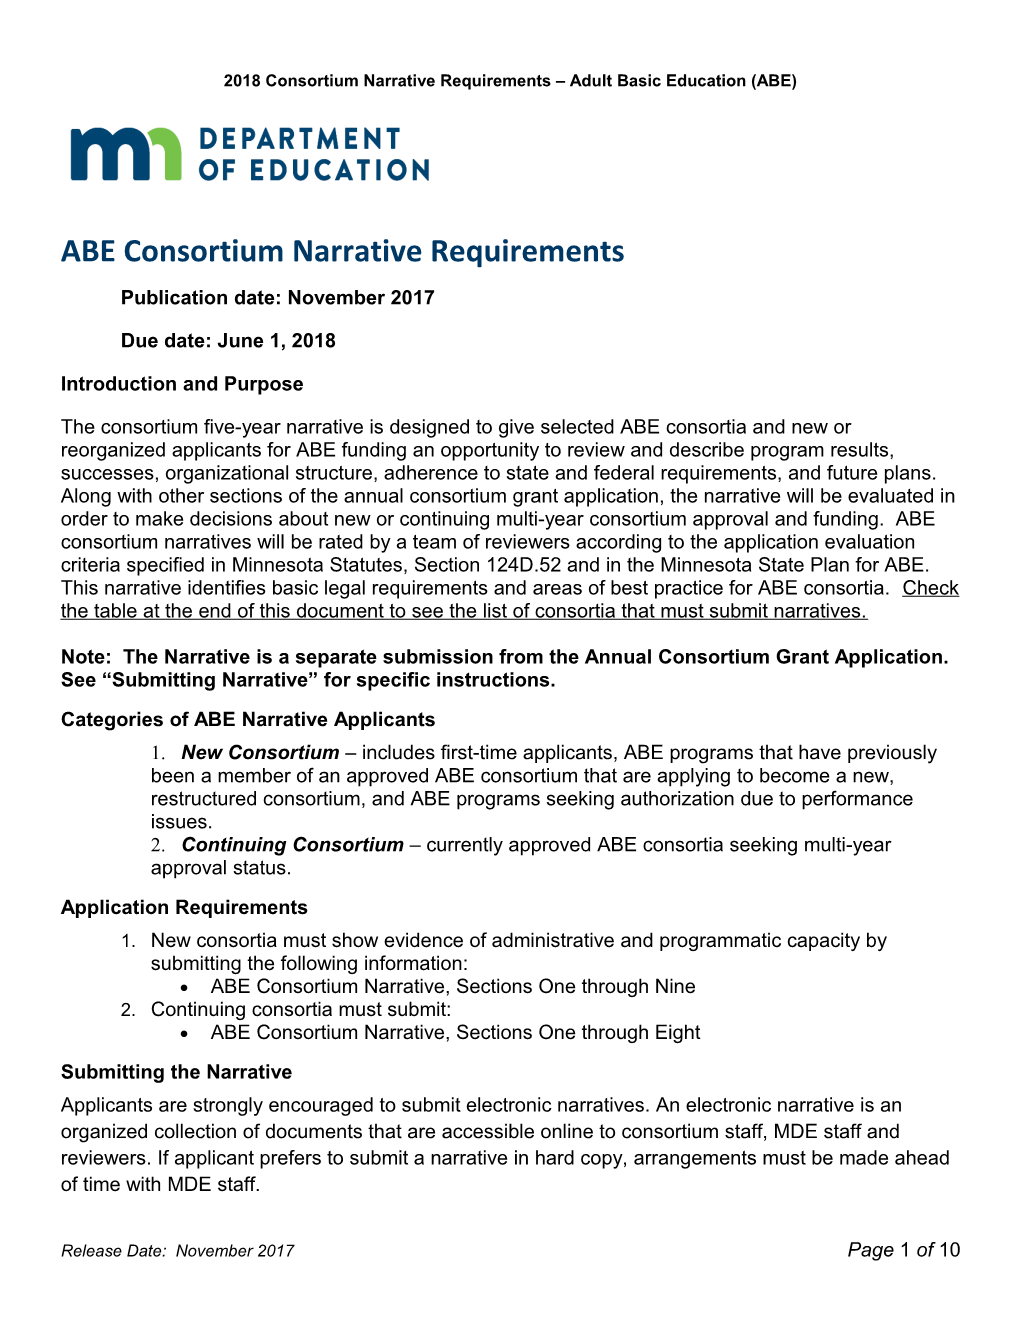 2018 Consortium Narrative Requirements Adult Basic Education (ABE)